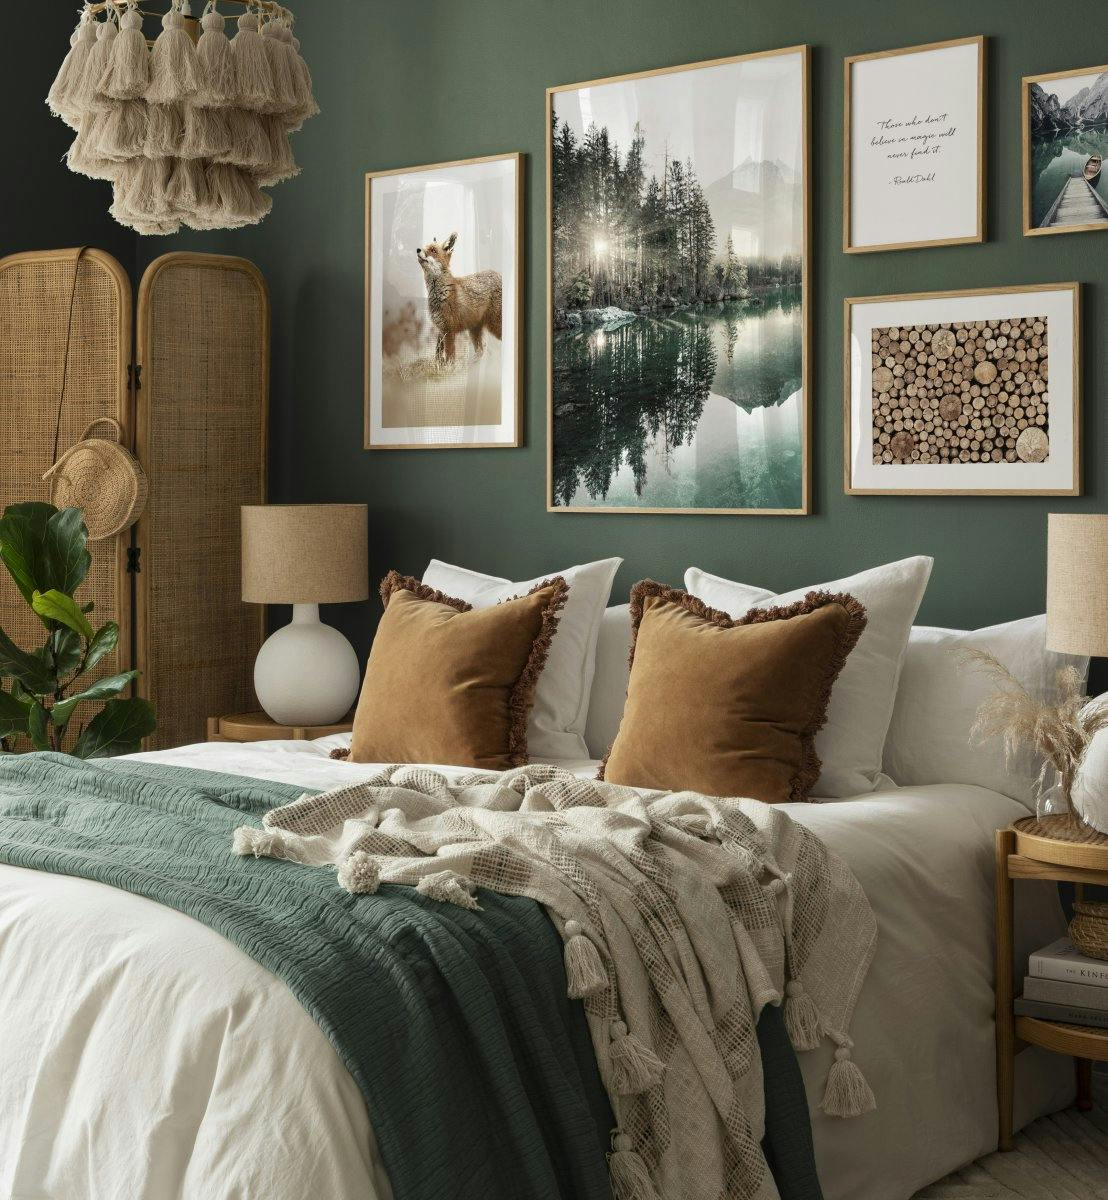 Dark nature posters and animal prints in trendy bohemic bedroom